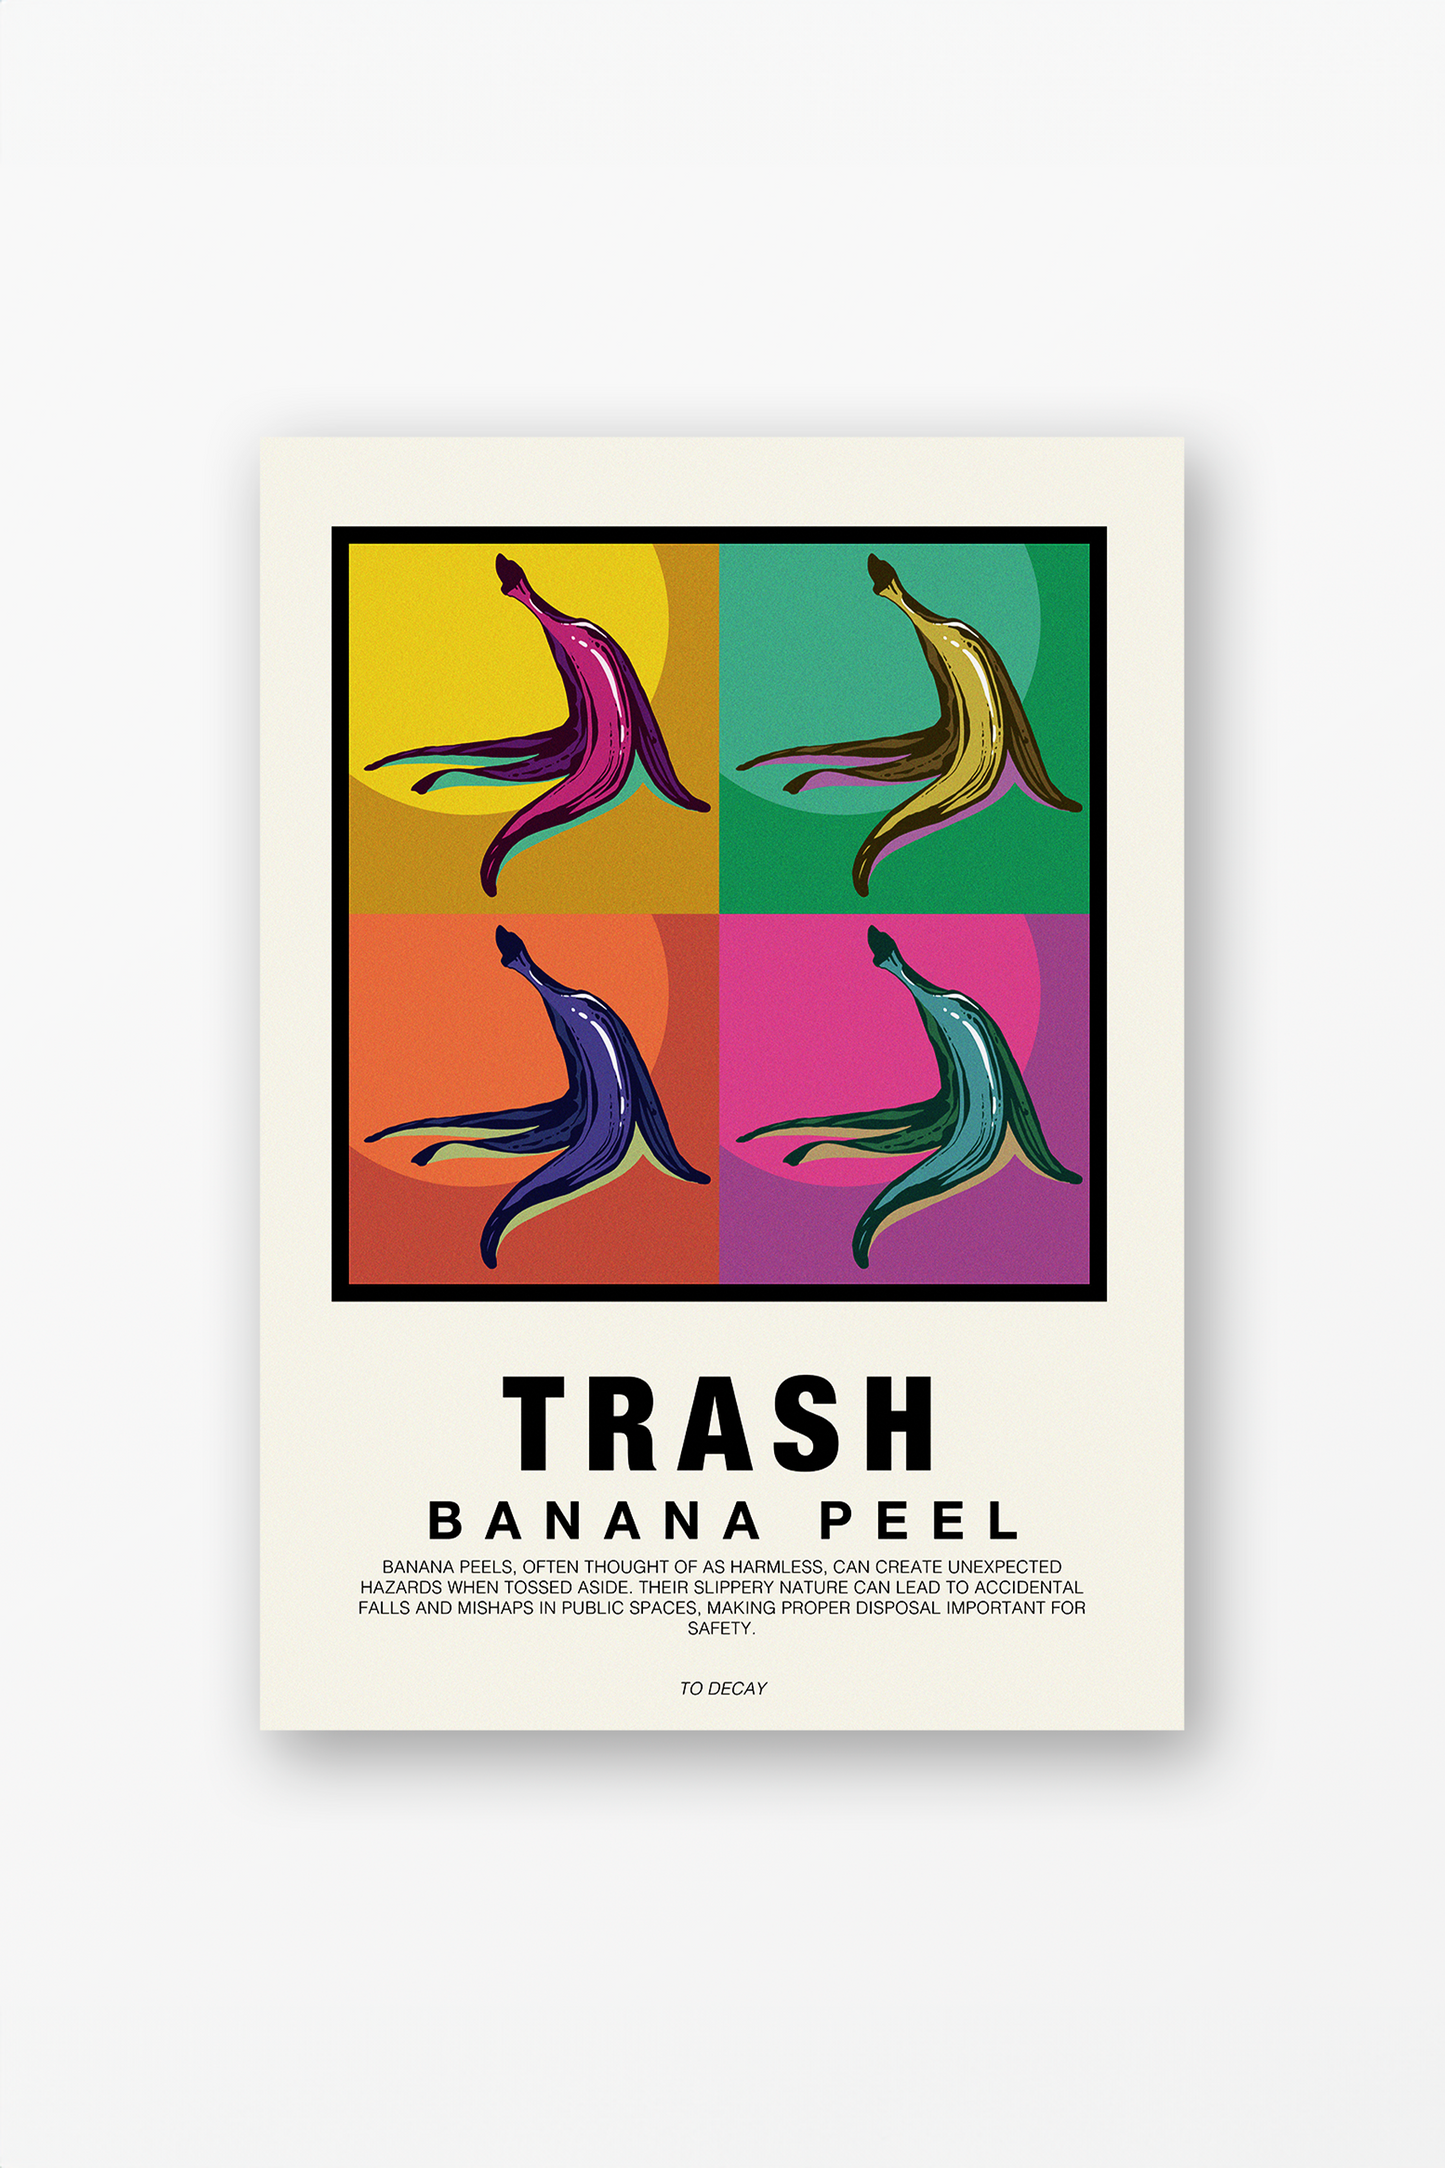 Trash - Banana Peel Poster